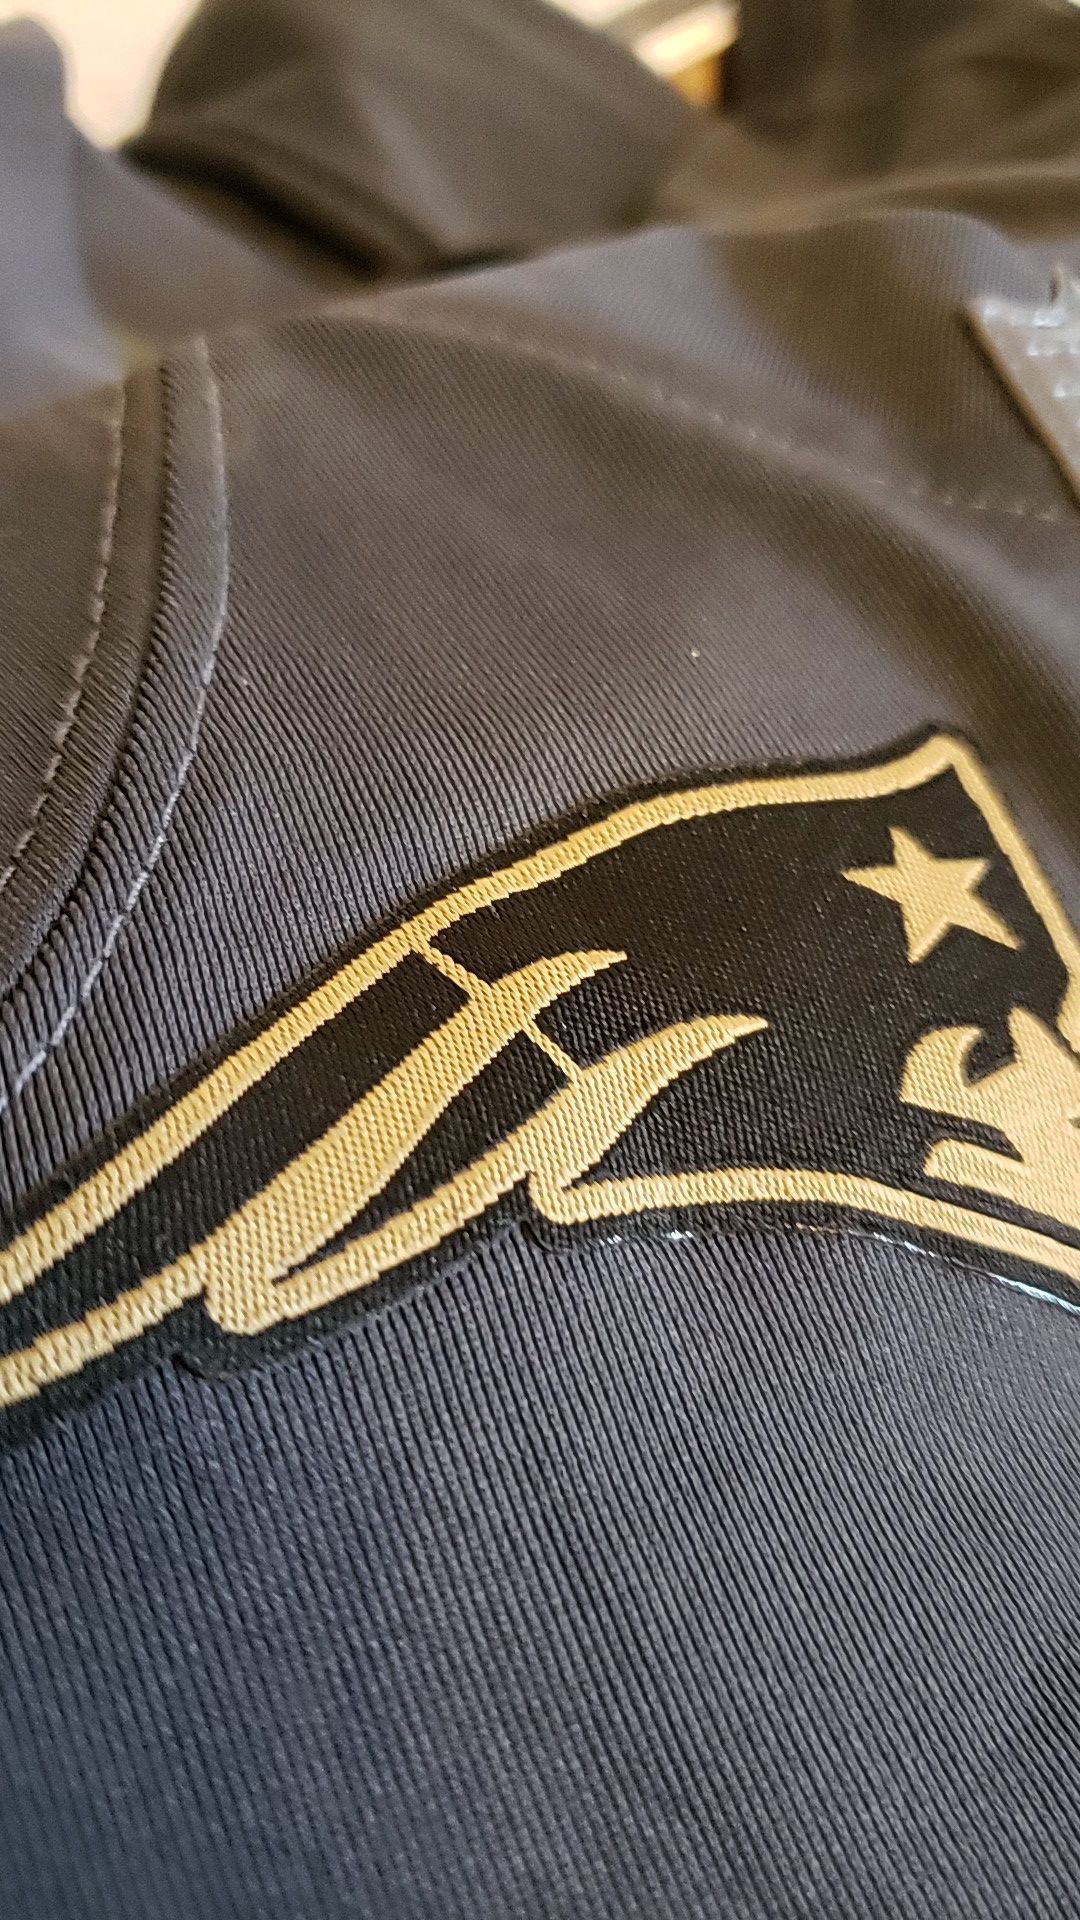 New England Patriots football jersey/ LeGarrette Blount #29